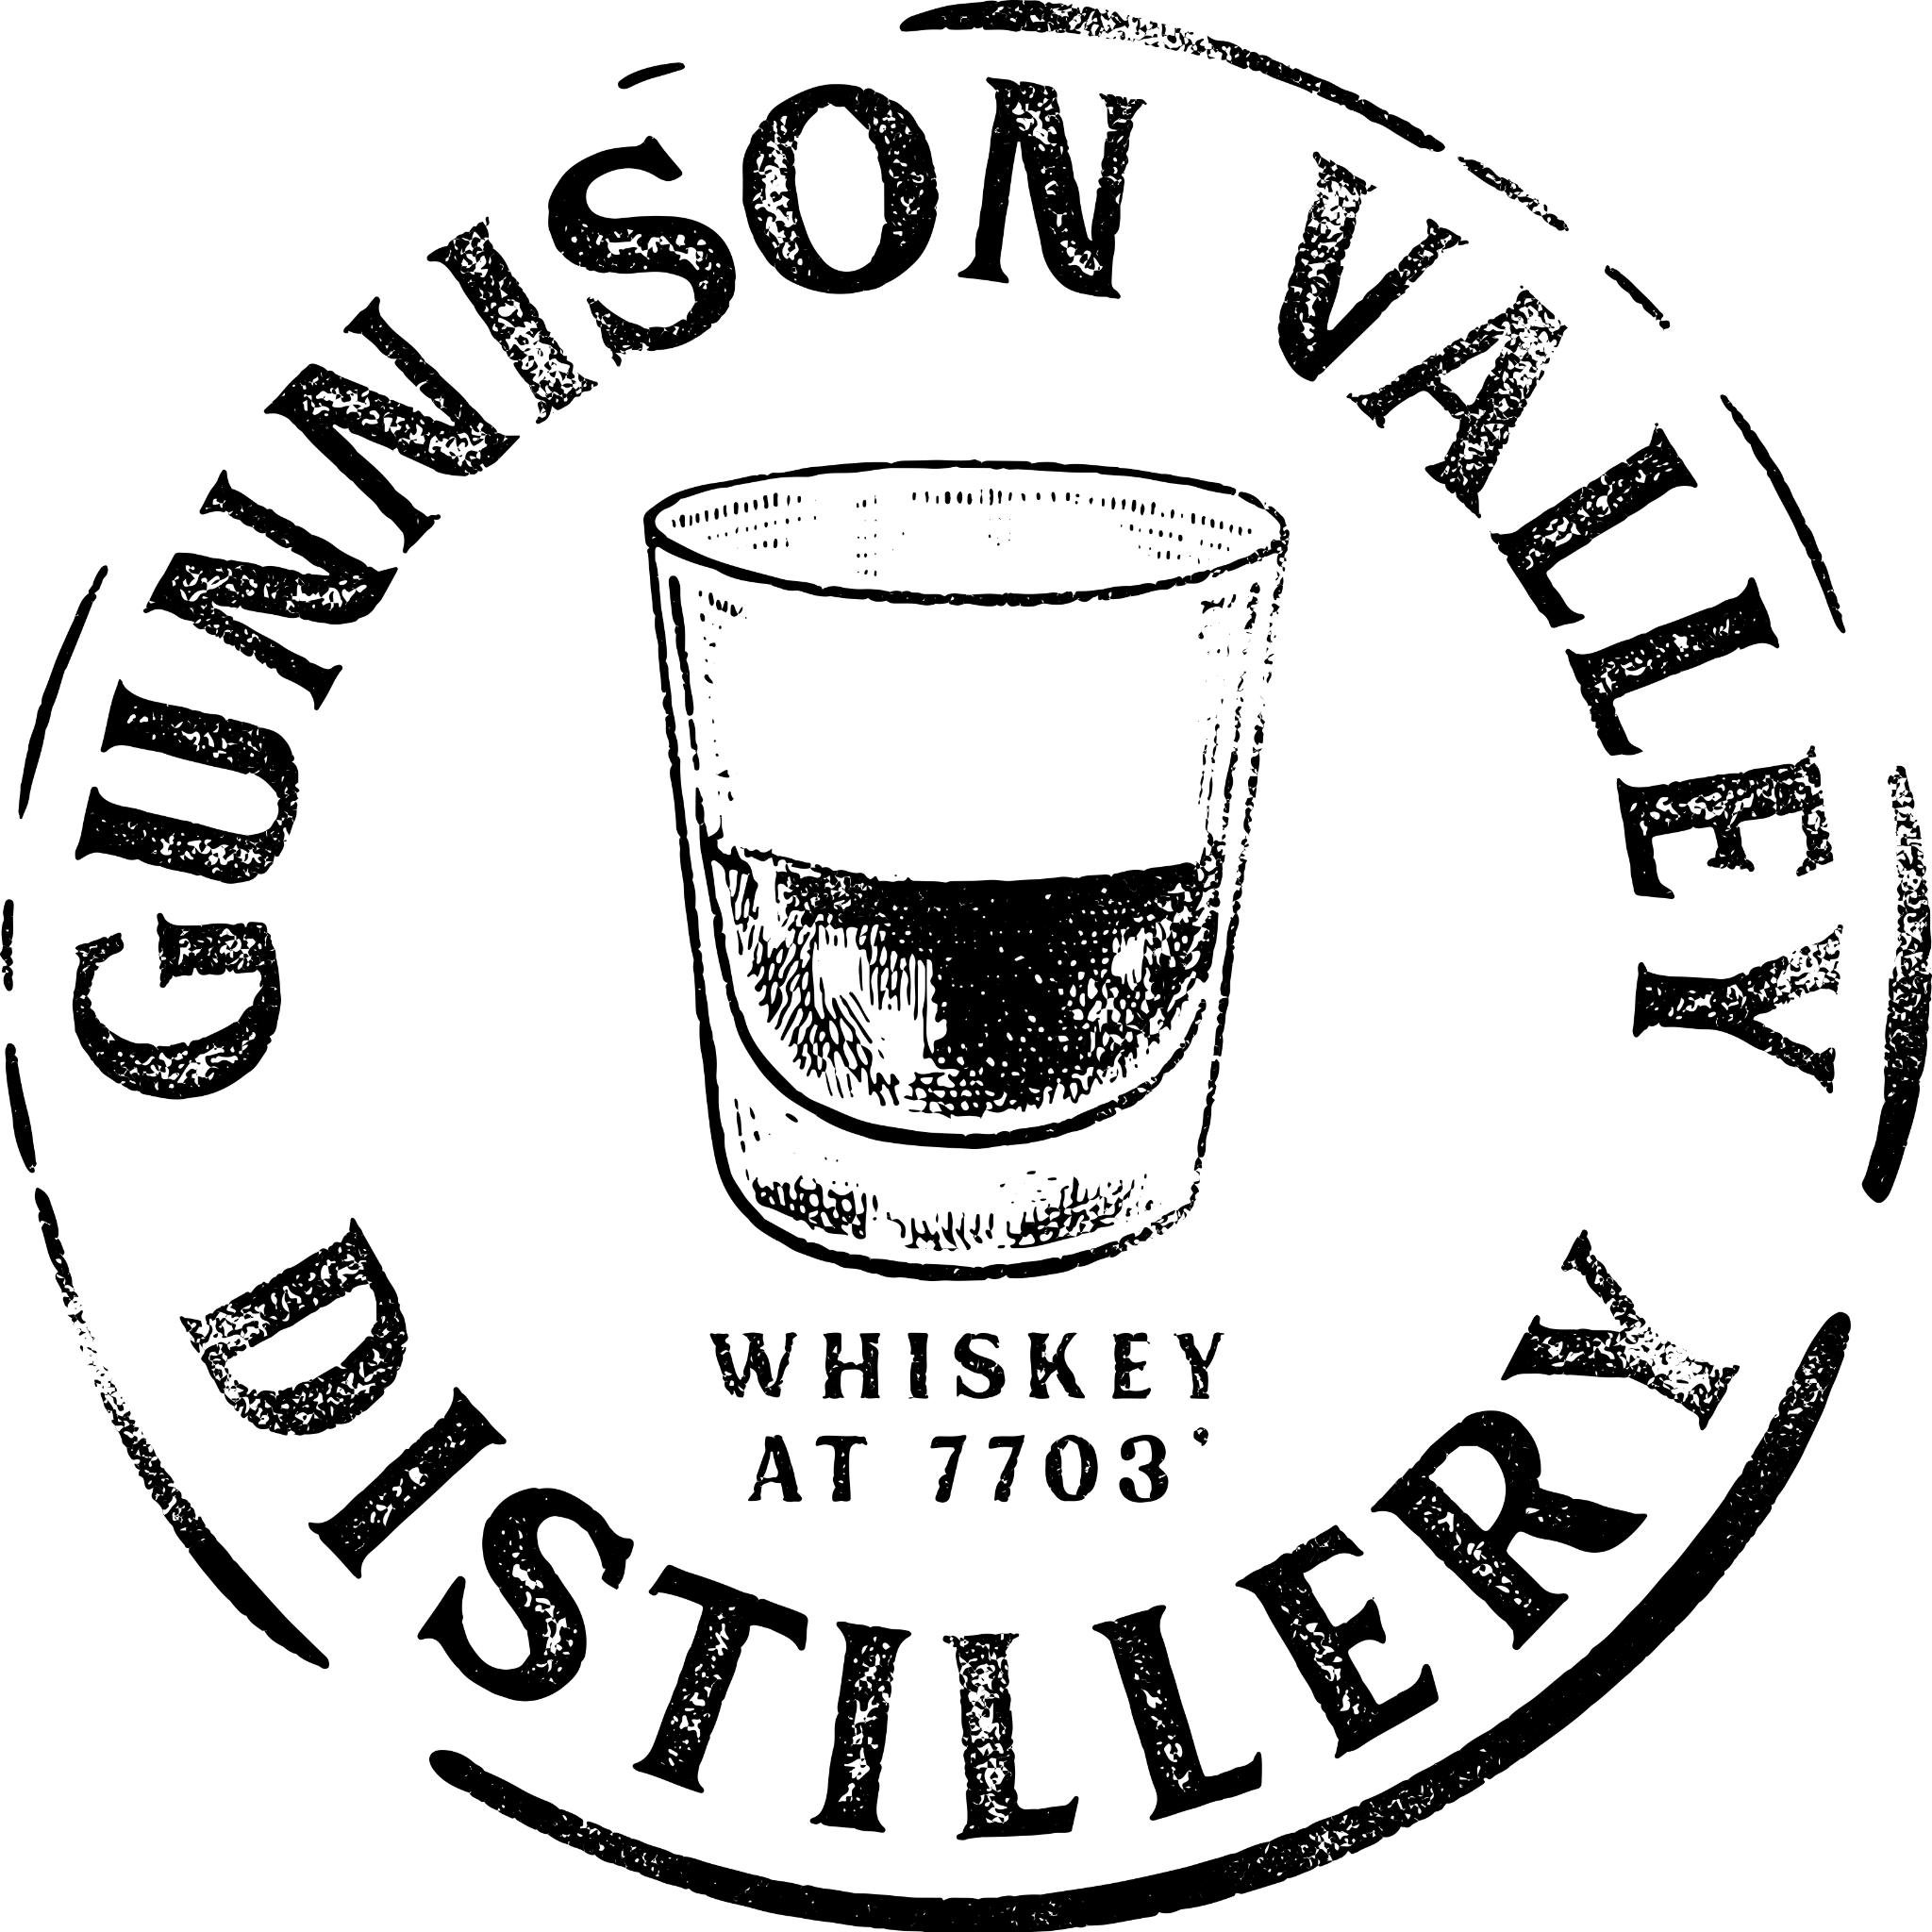 Bringing outstanding rye malt whiskey to Gunnison, Colorado.